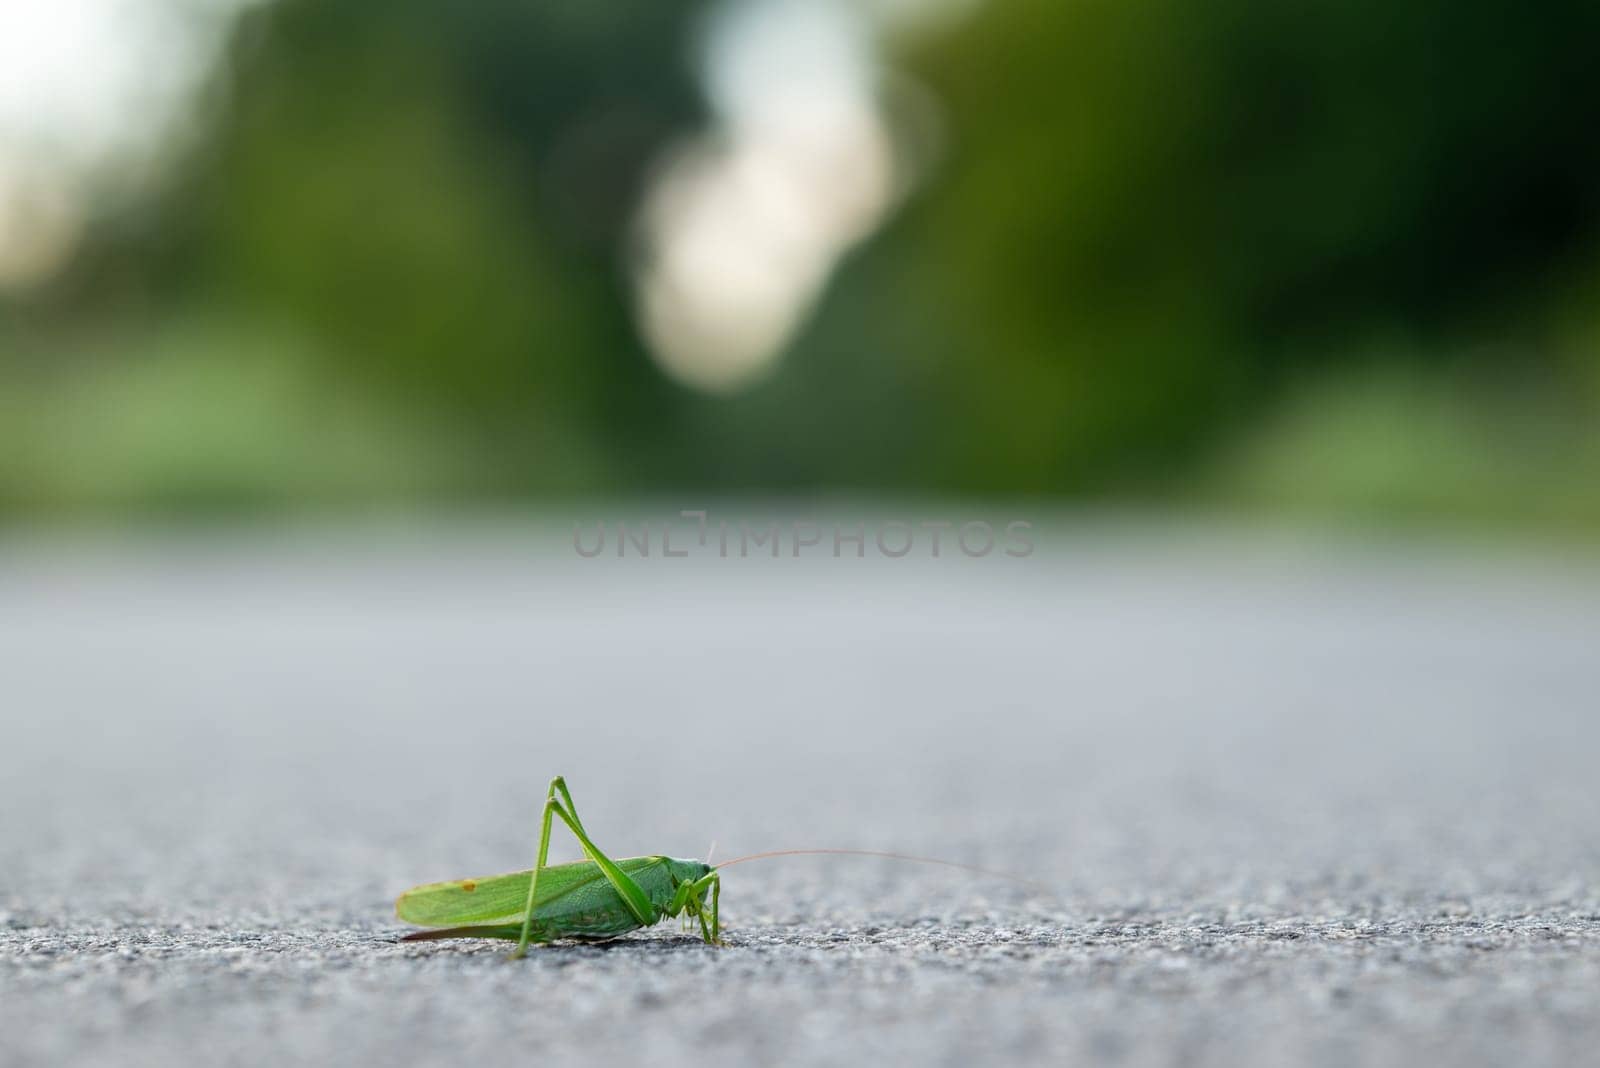 Macro shot of grasshopper sitting on asphalt, nature life, details